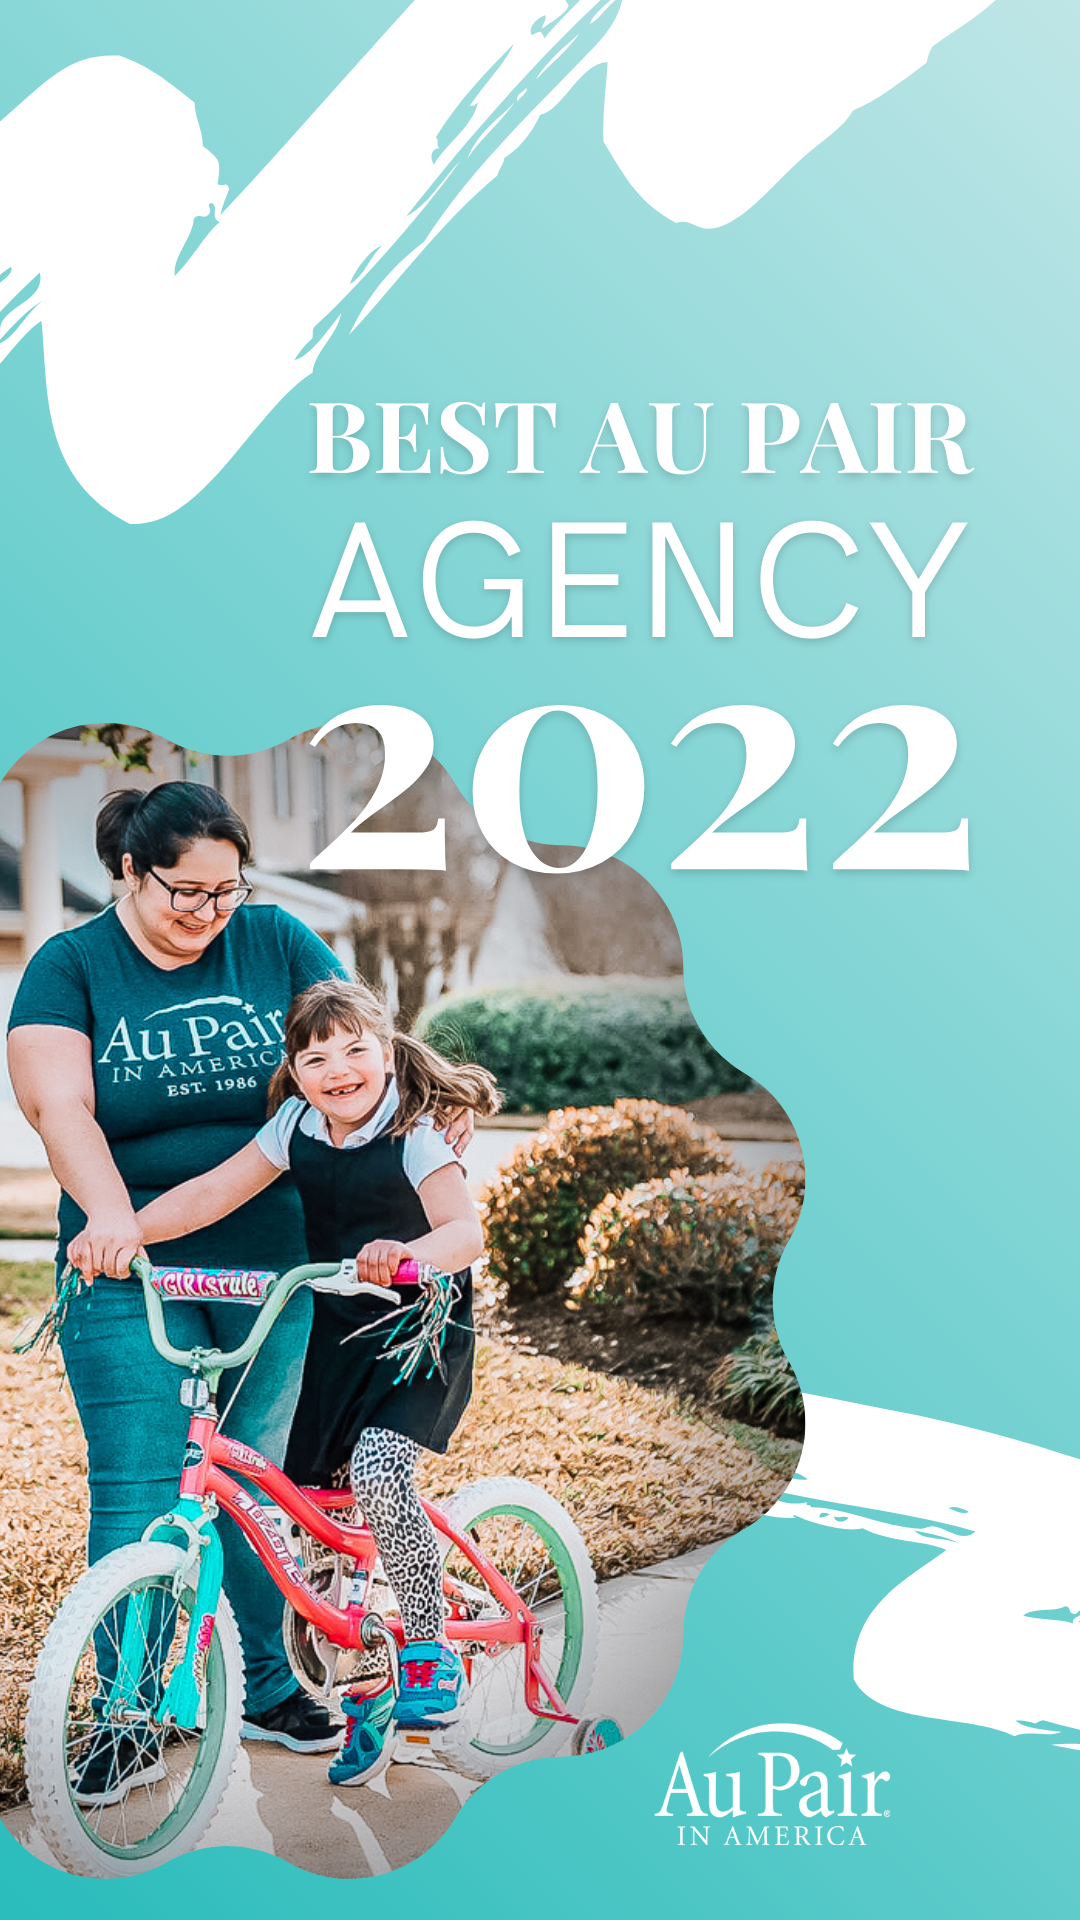 Au Pair in America named Best Au Pair Agency for 2022 by Verywell Family